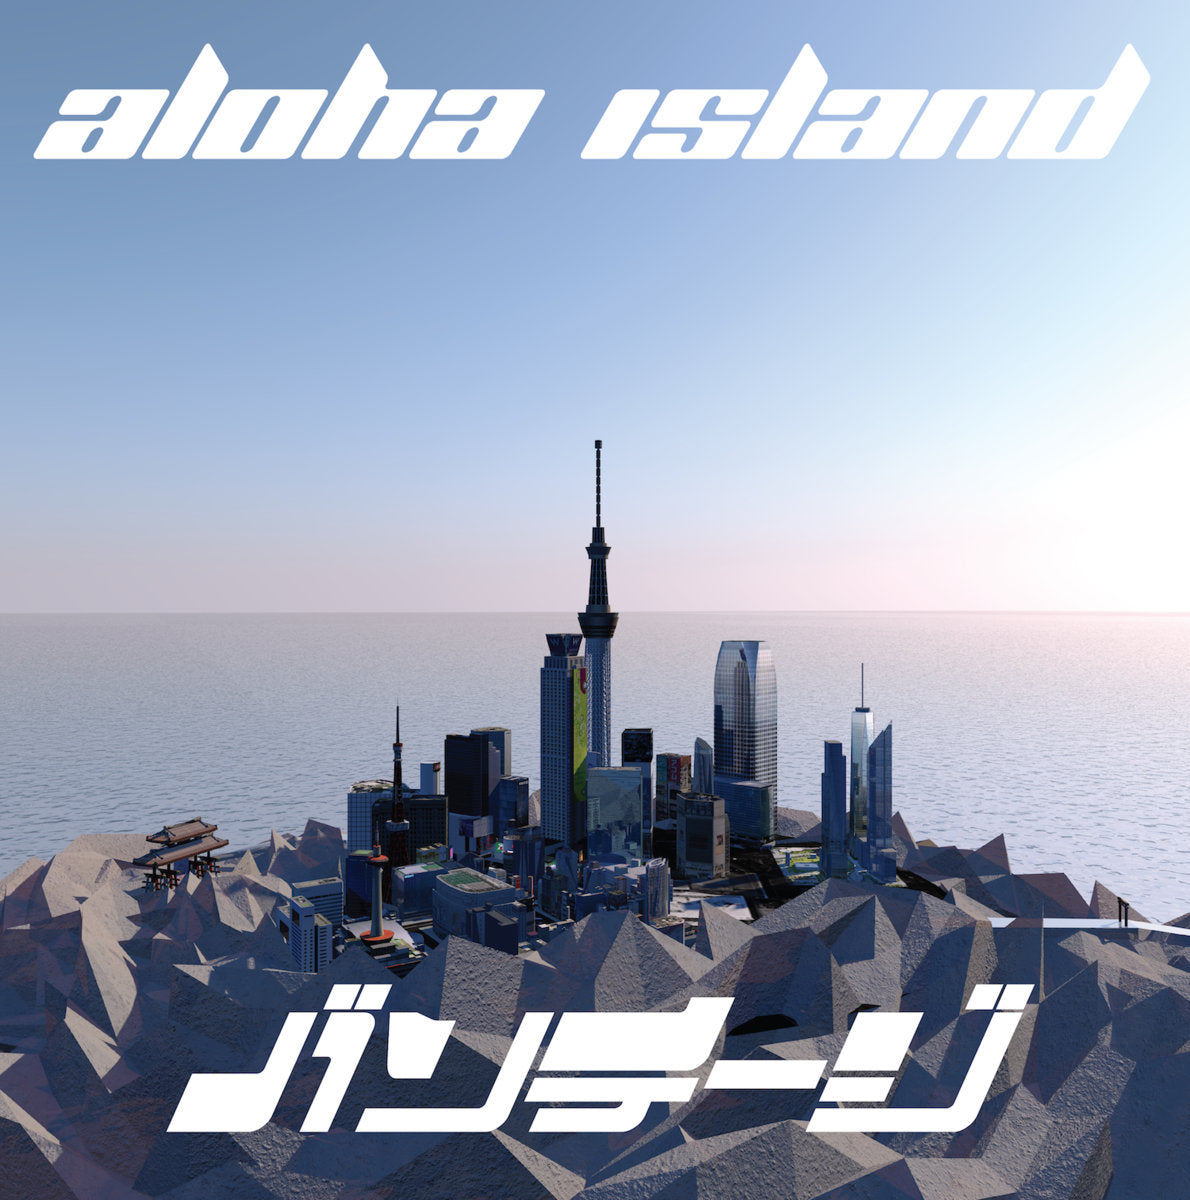 VANTAGE// - Aloha Island album released !